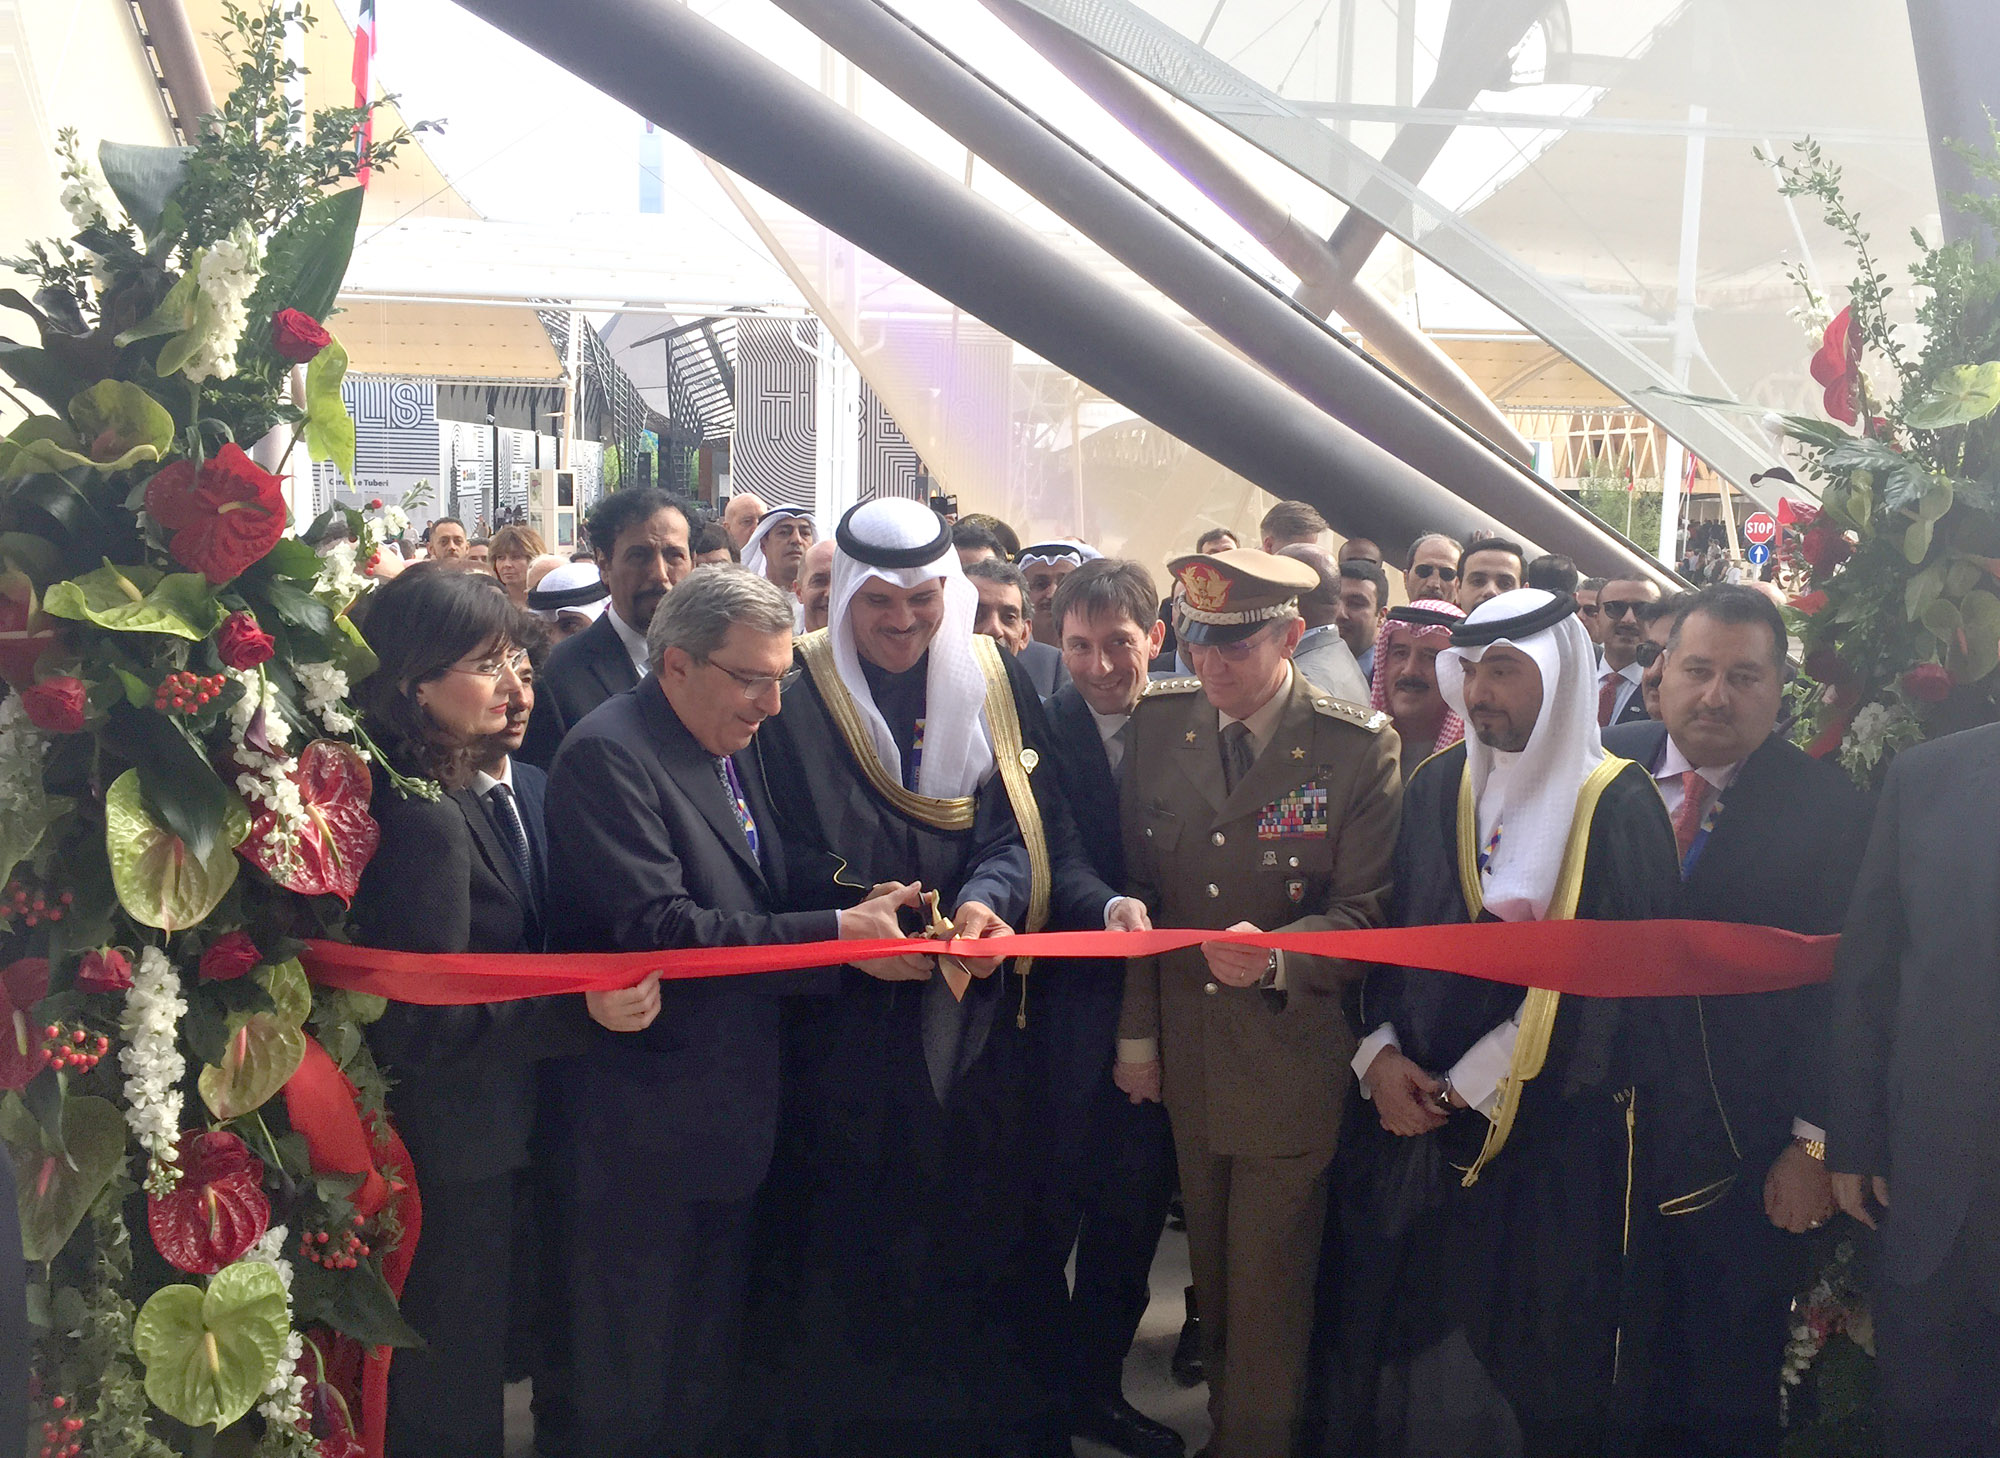 Kuwait's Information Minister Sheikh Salman Al-Sabah opens Kuwait's pavilion at Expo Milan 2015